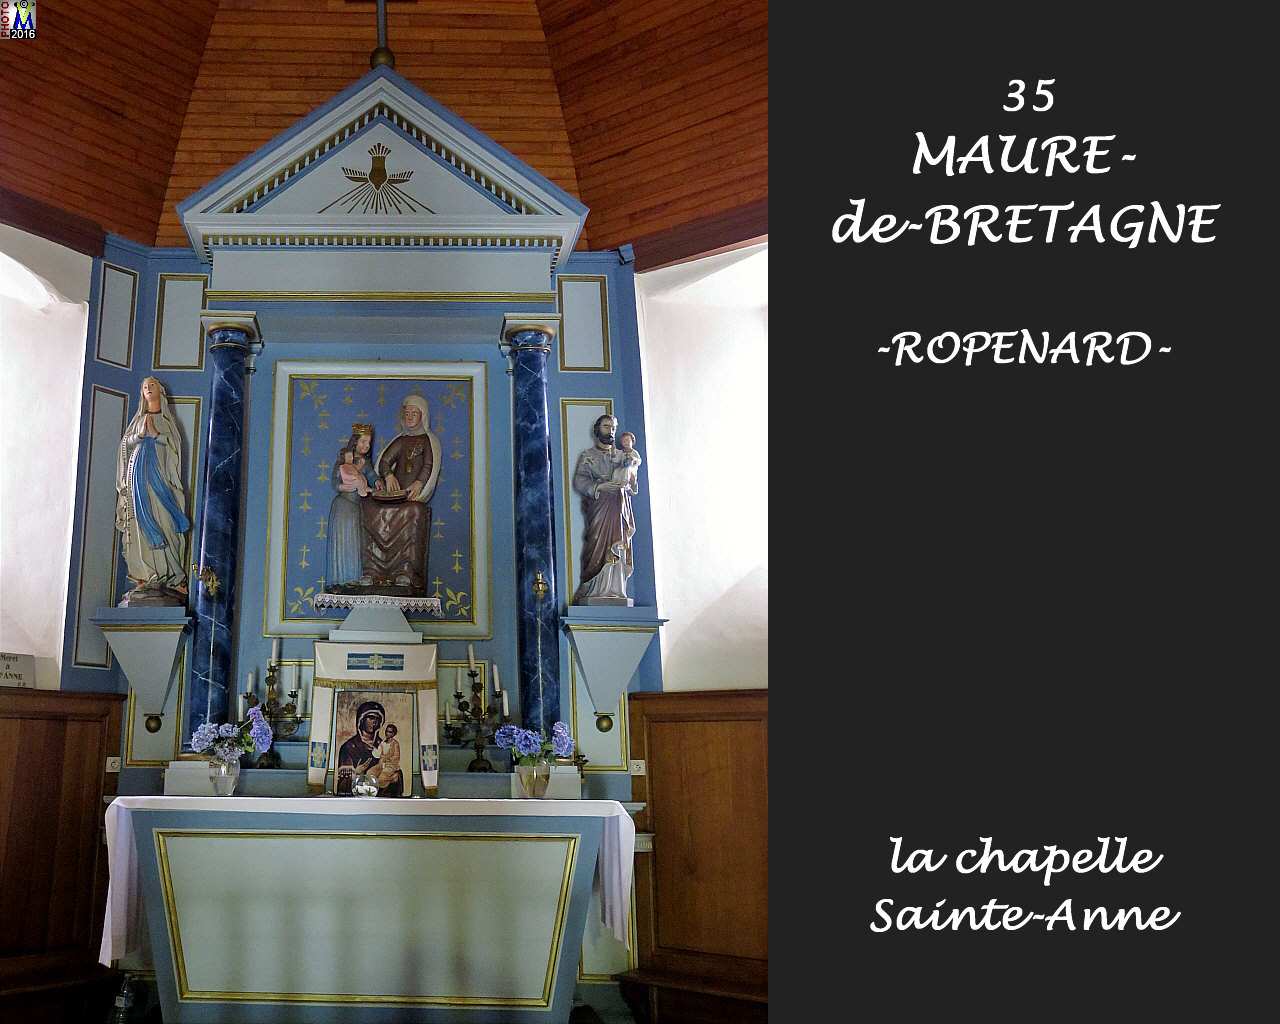 35MAURE-BRETAGNEzROPENARD_chapelle_210.jpg